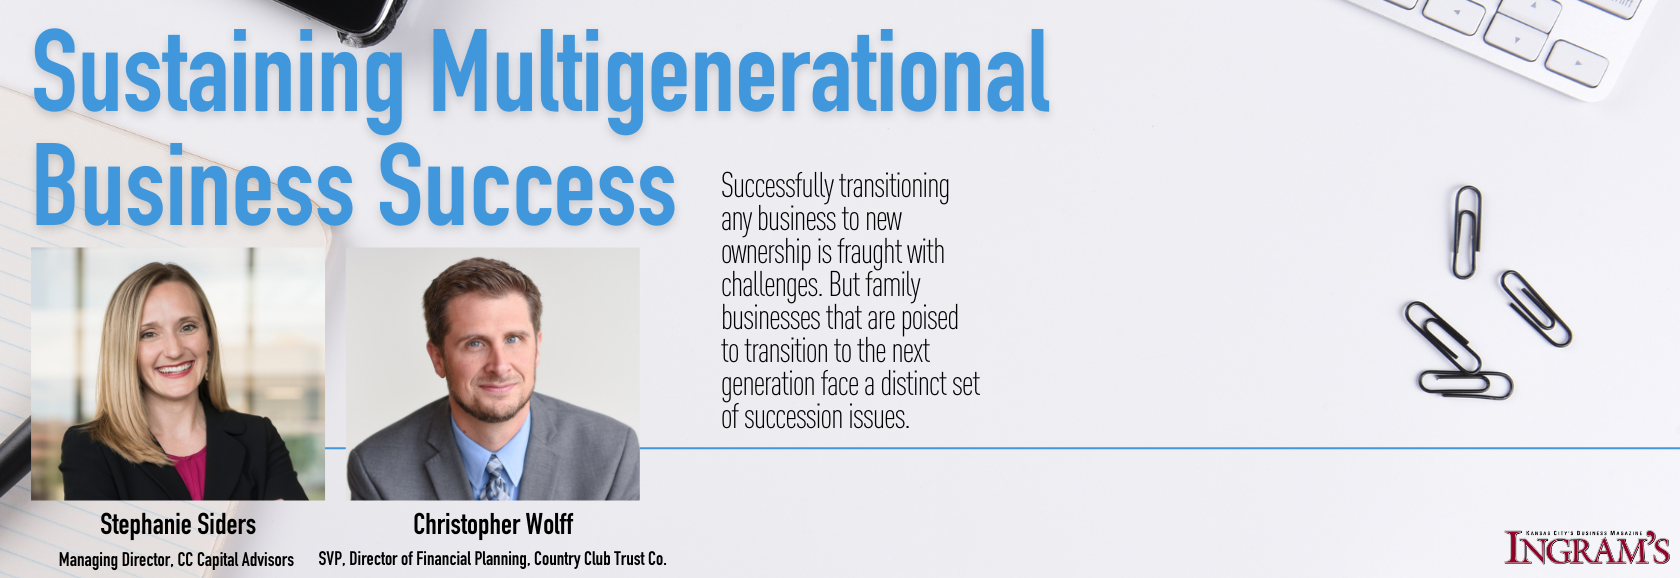 Sustaining Multigenerational Business Success banner image